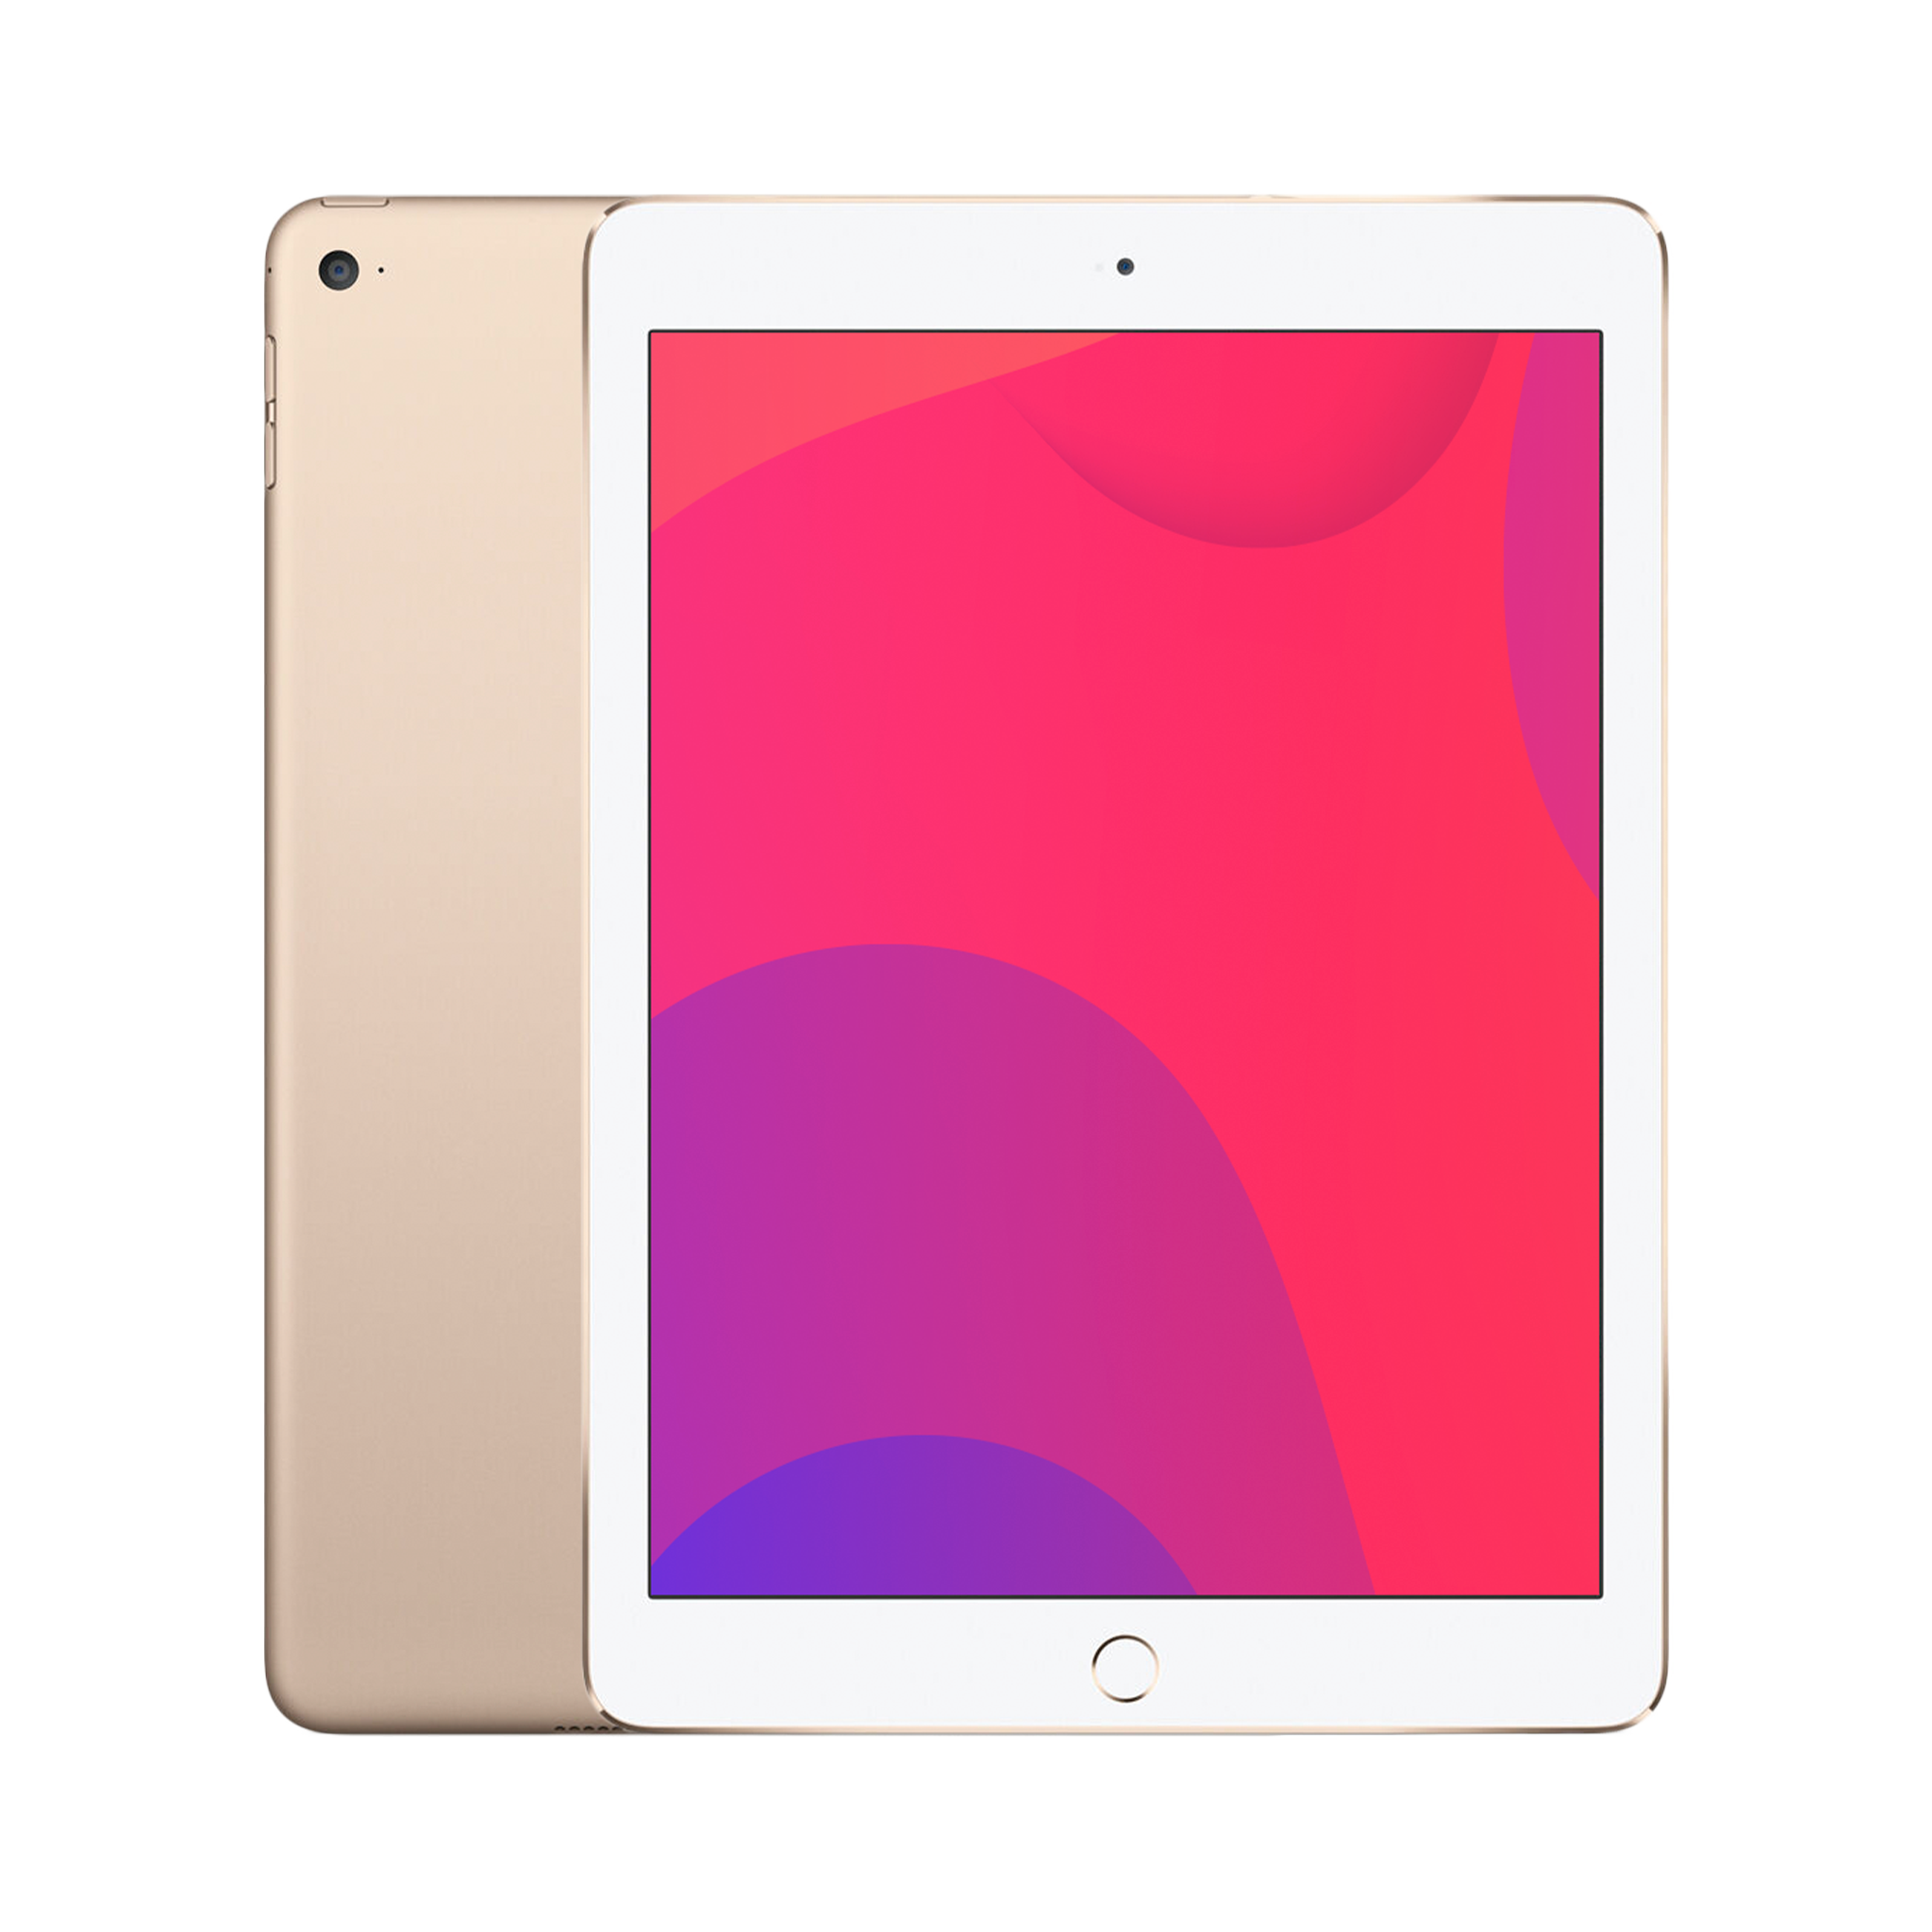 Apple iPad Mini (WiFi + Cellular) 16GB Gold - No Touch ID